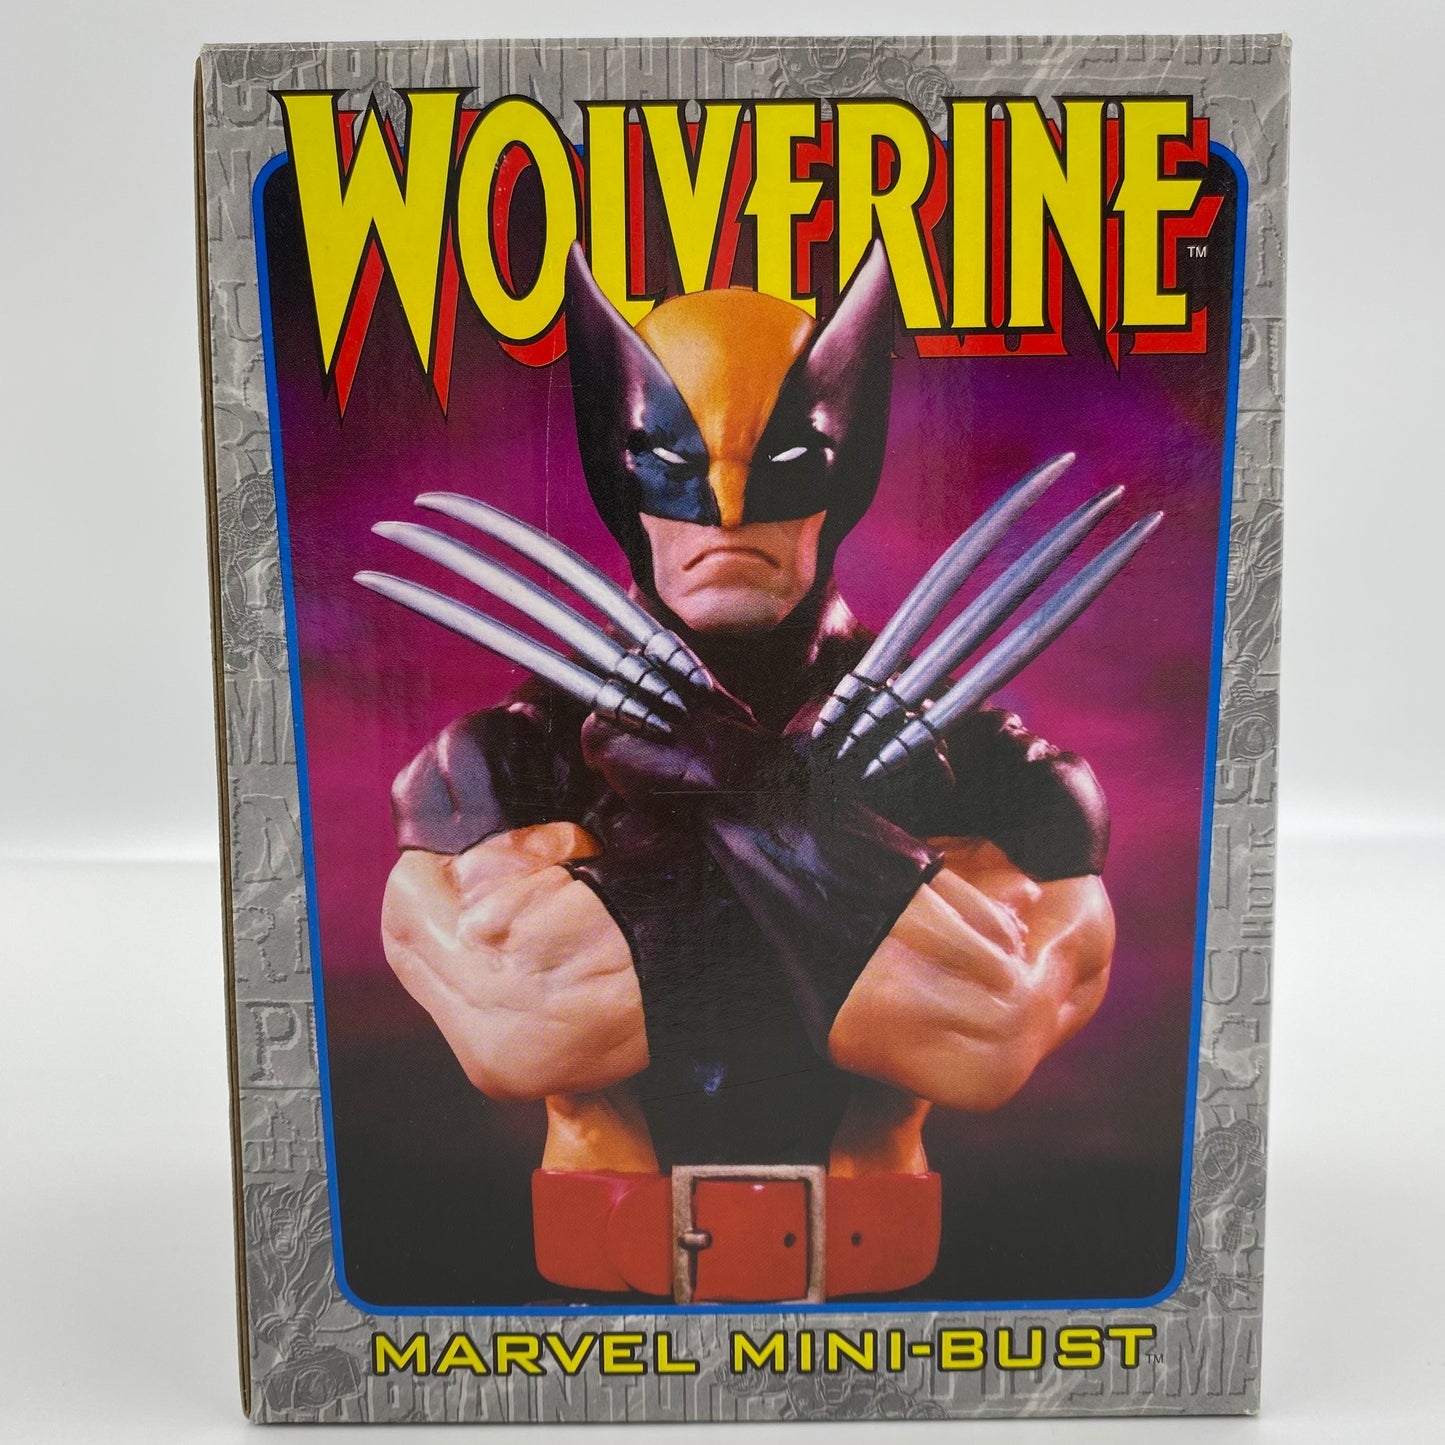 Wolverine Marvel mini-bust (2000) Bowen Designs